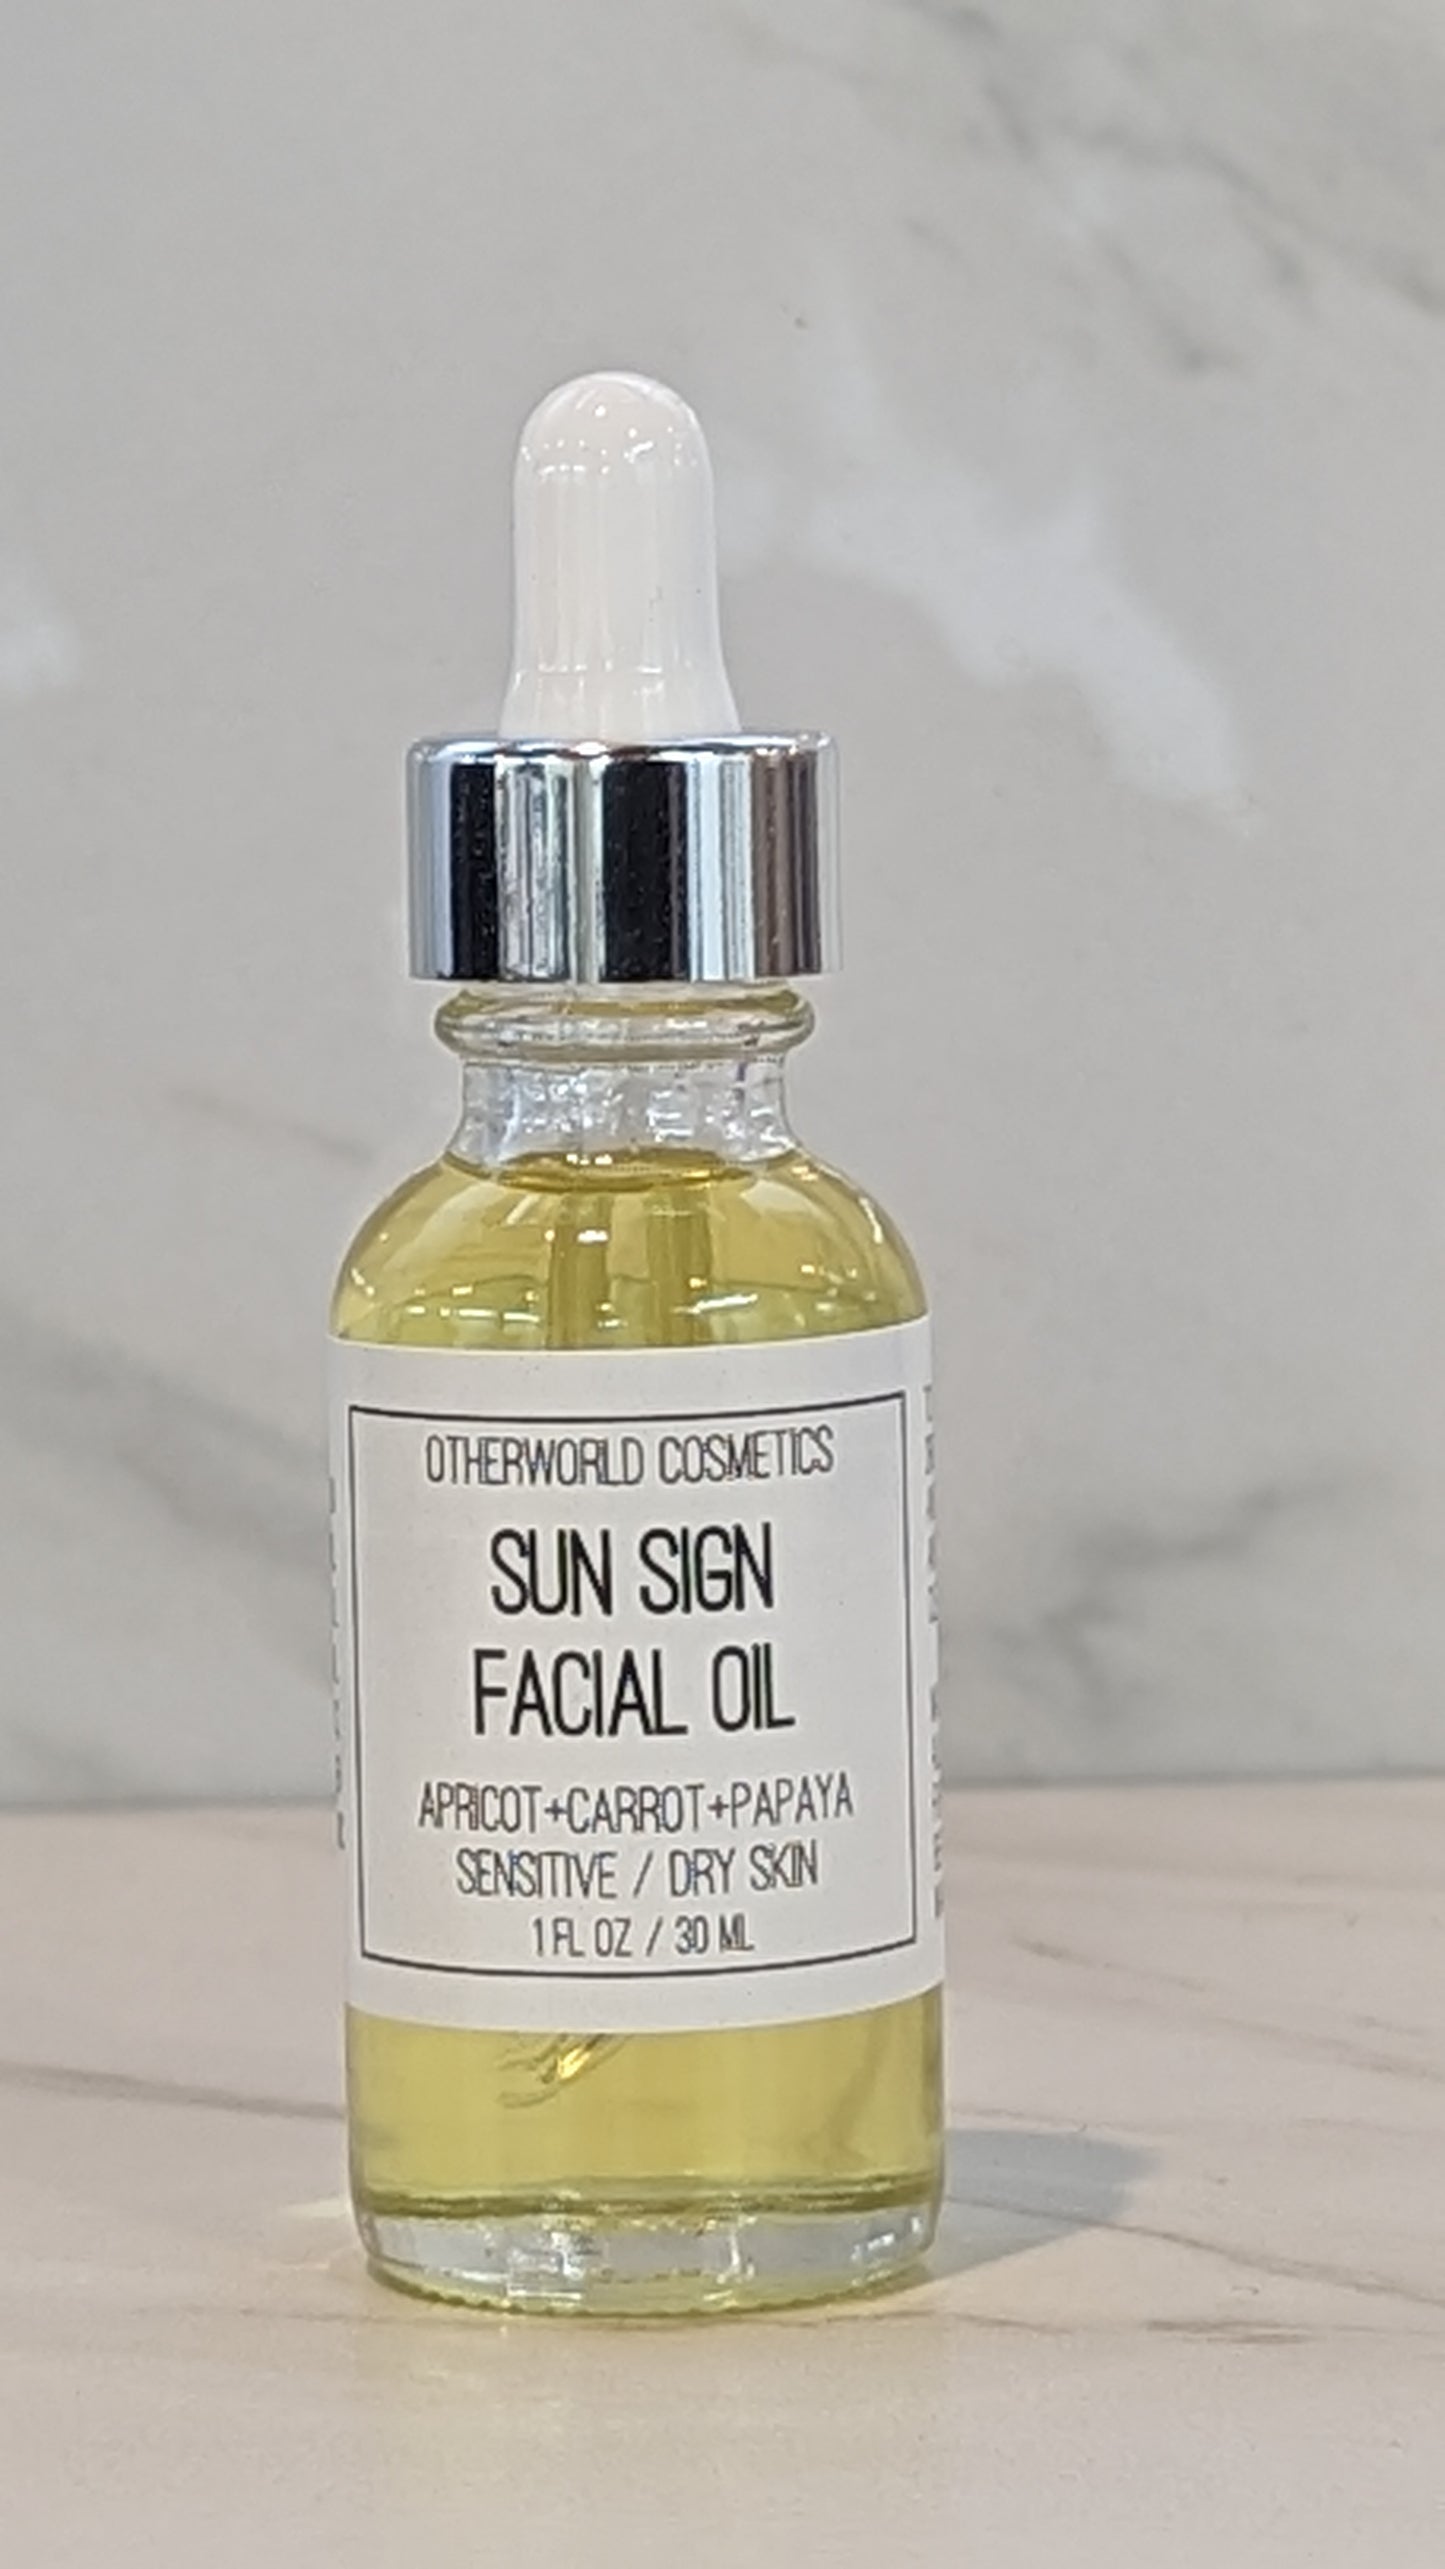 Sun Sign Facial Oil - Sensitive / Dry Skin